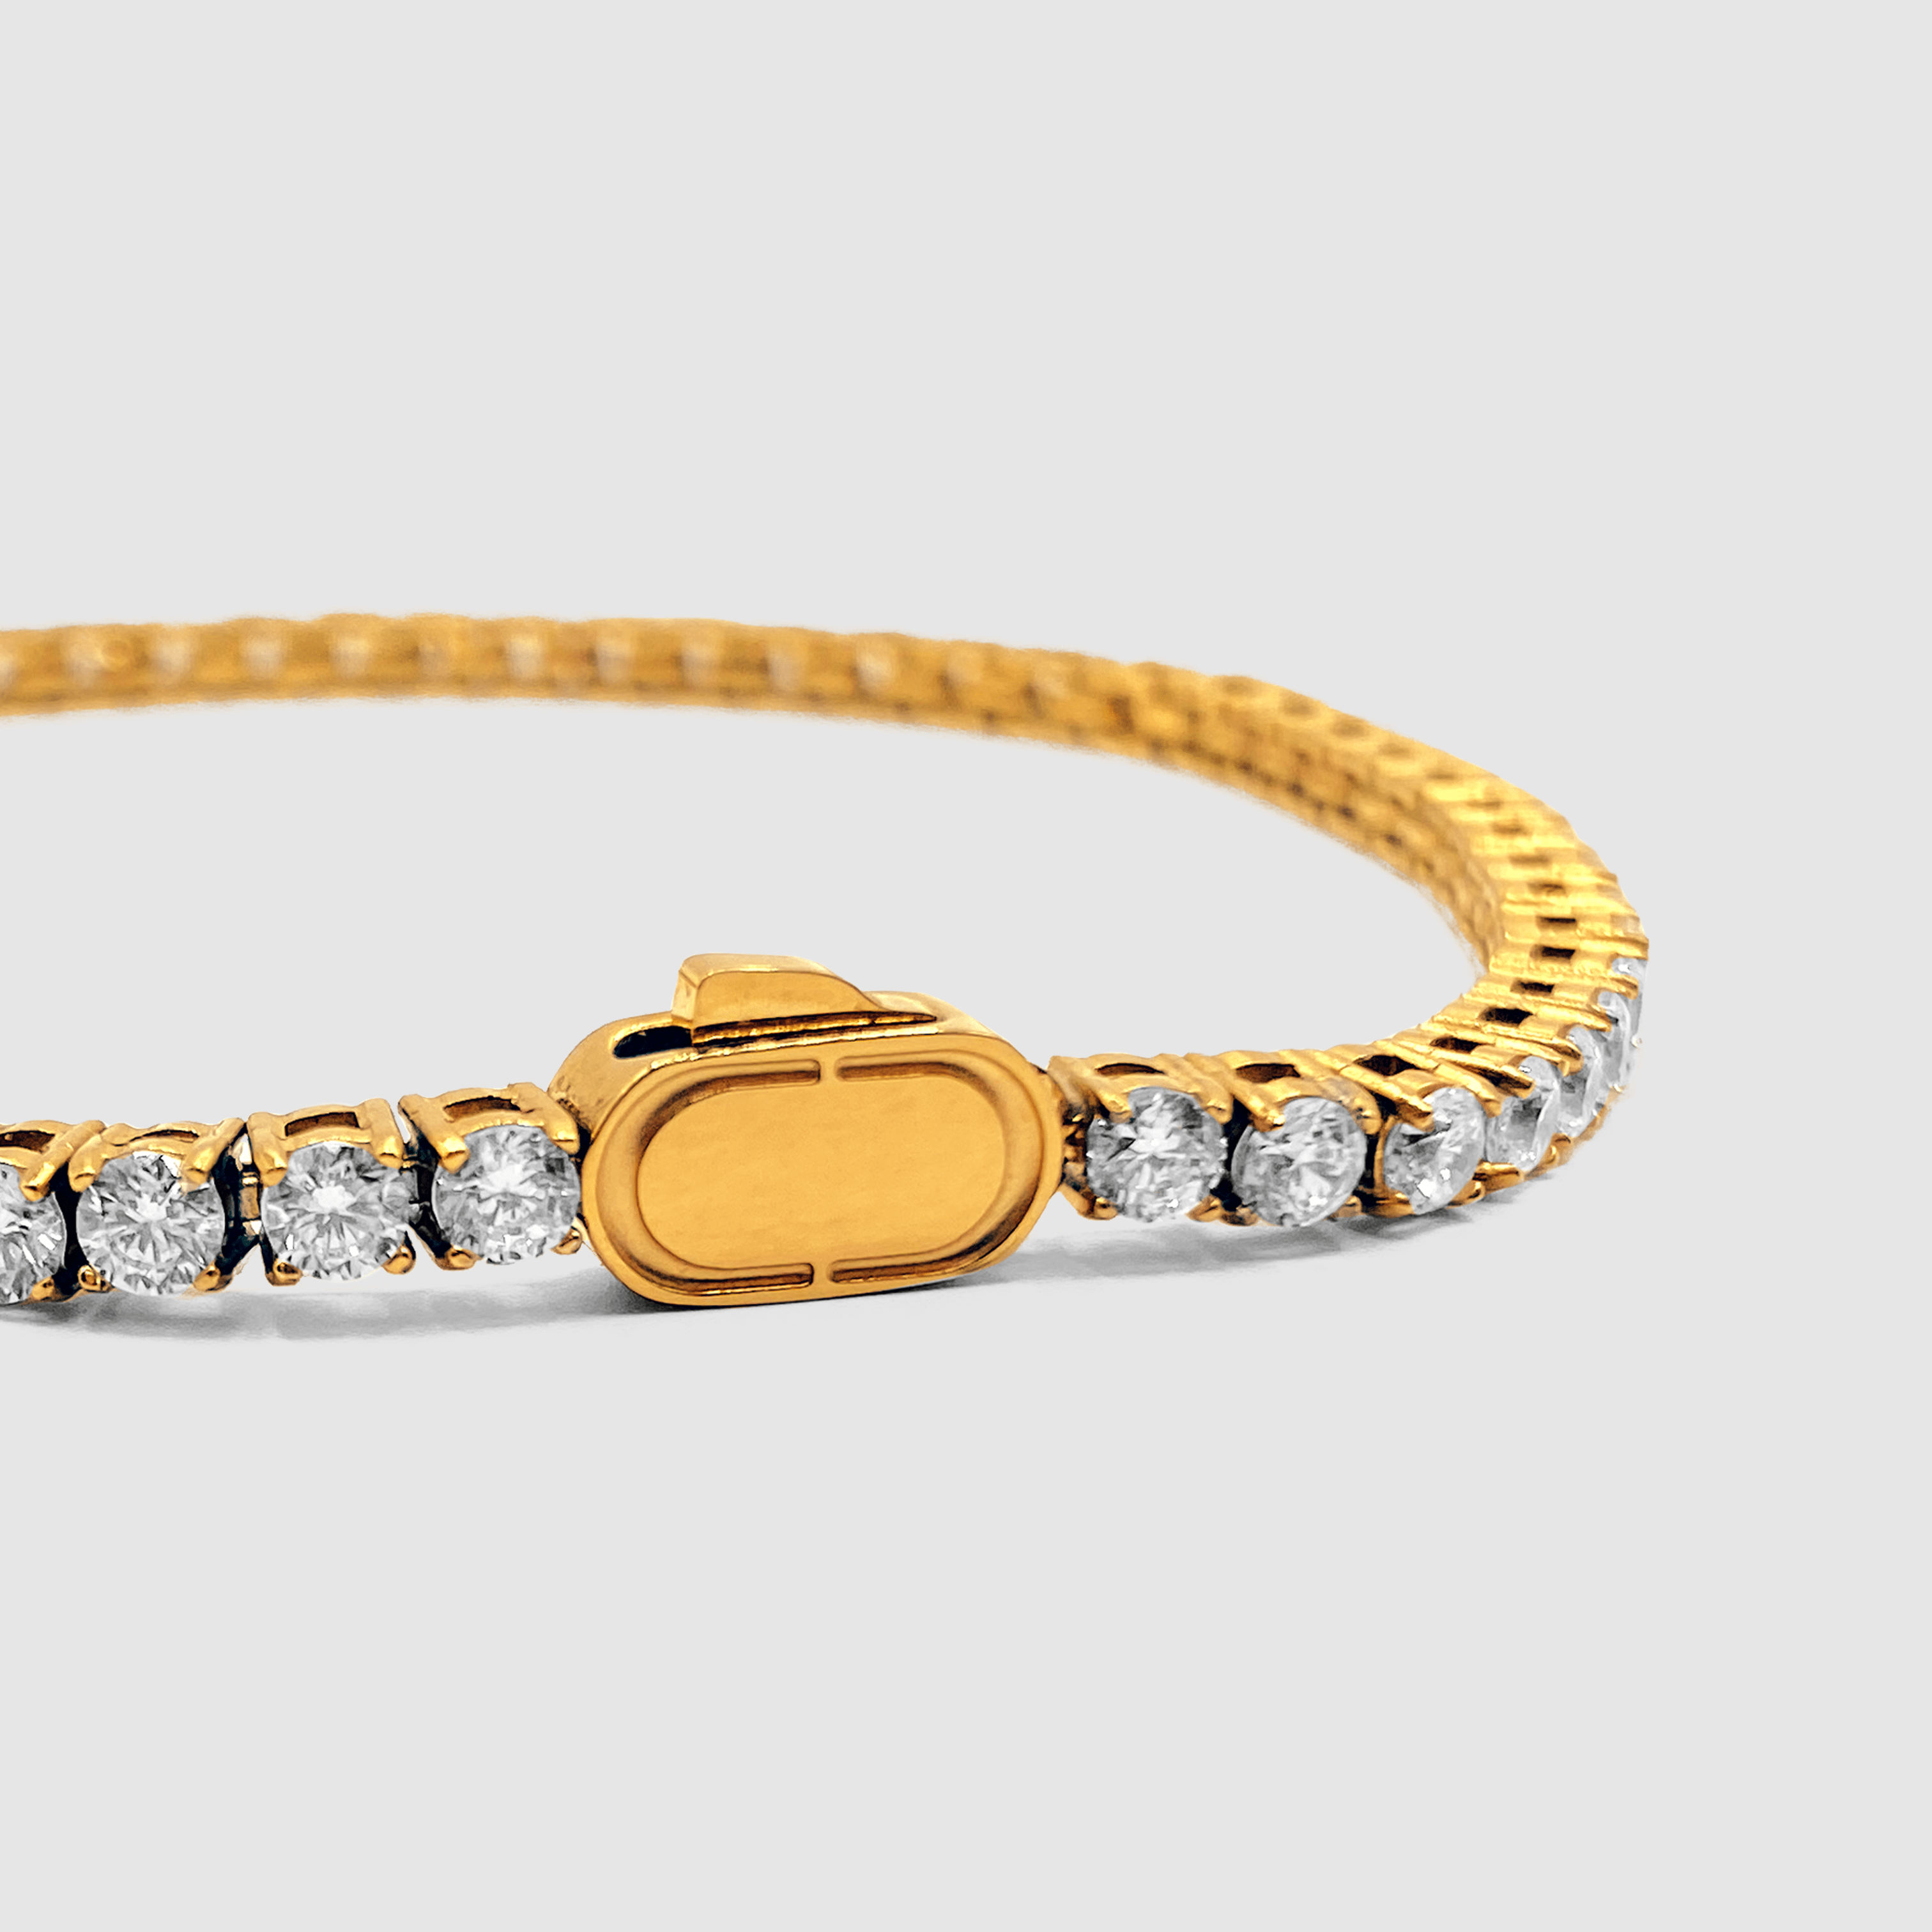 Tennis Bracelet (Gold) 3mm